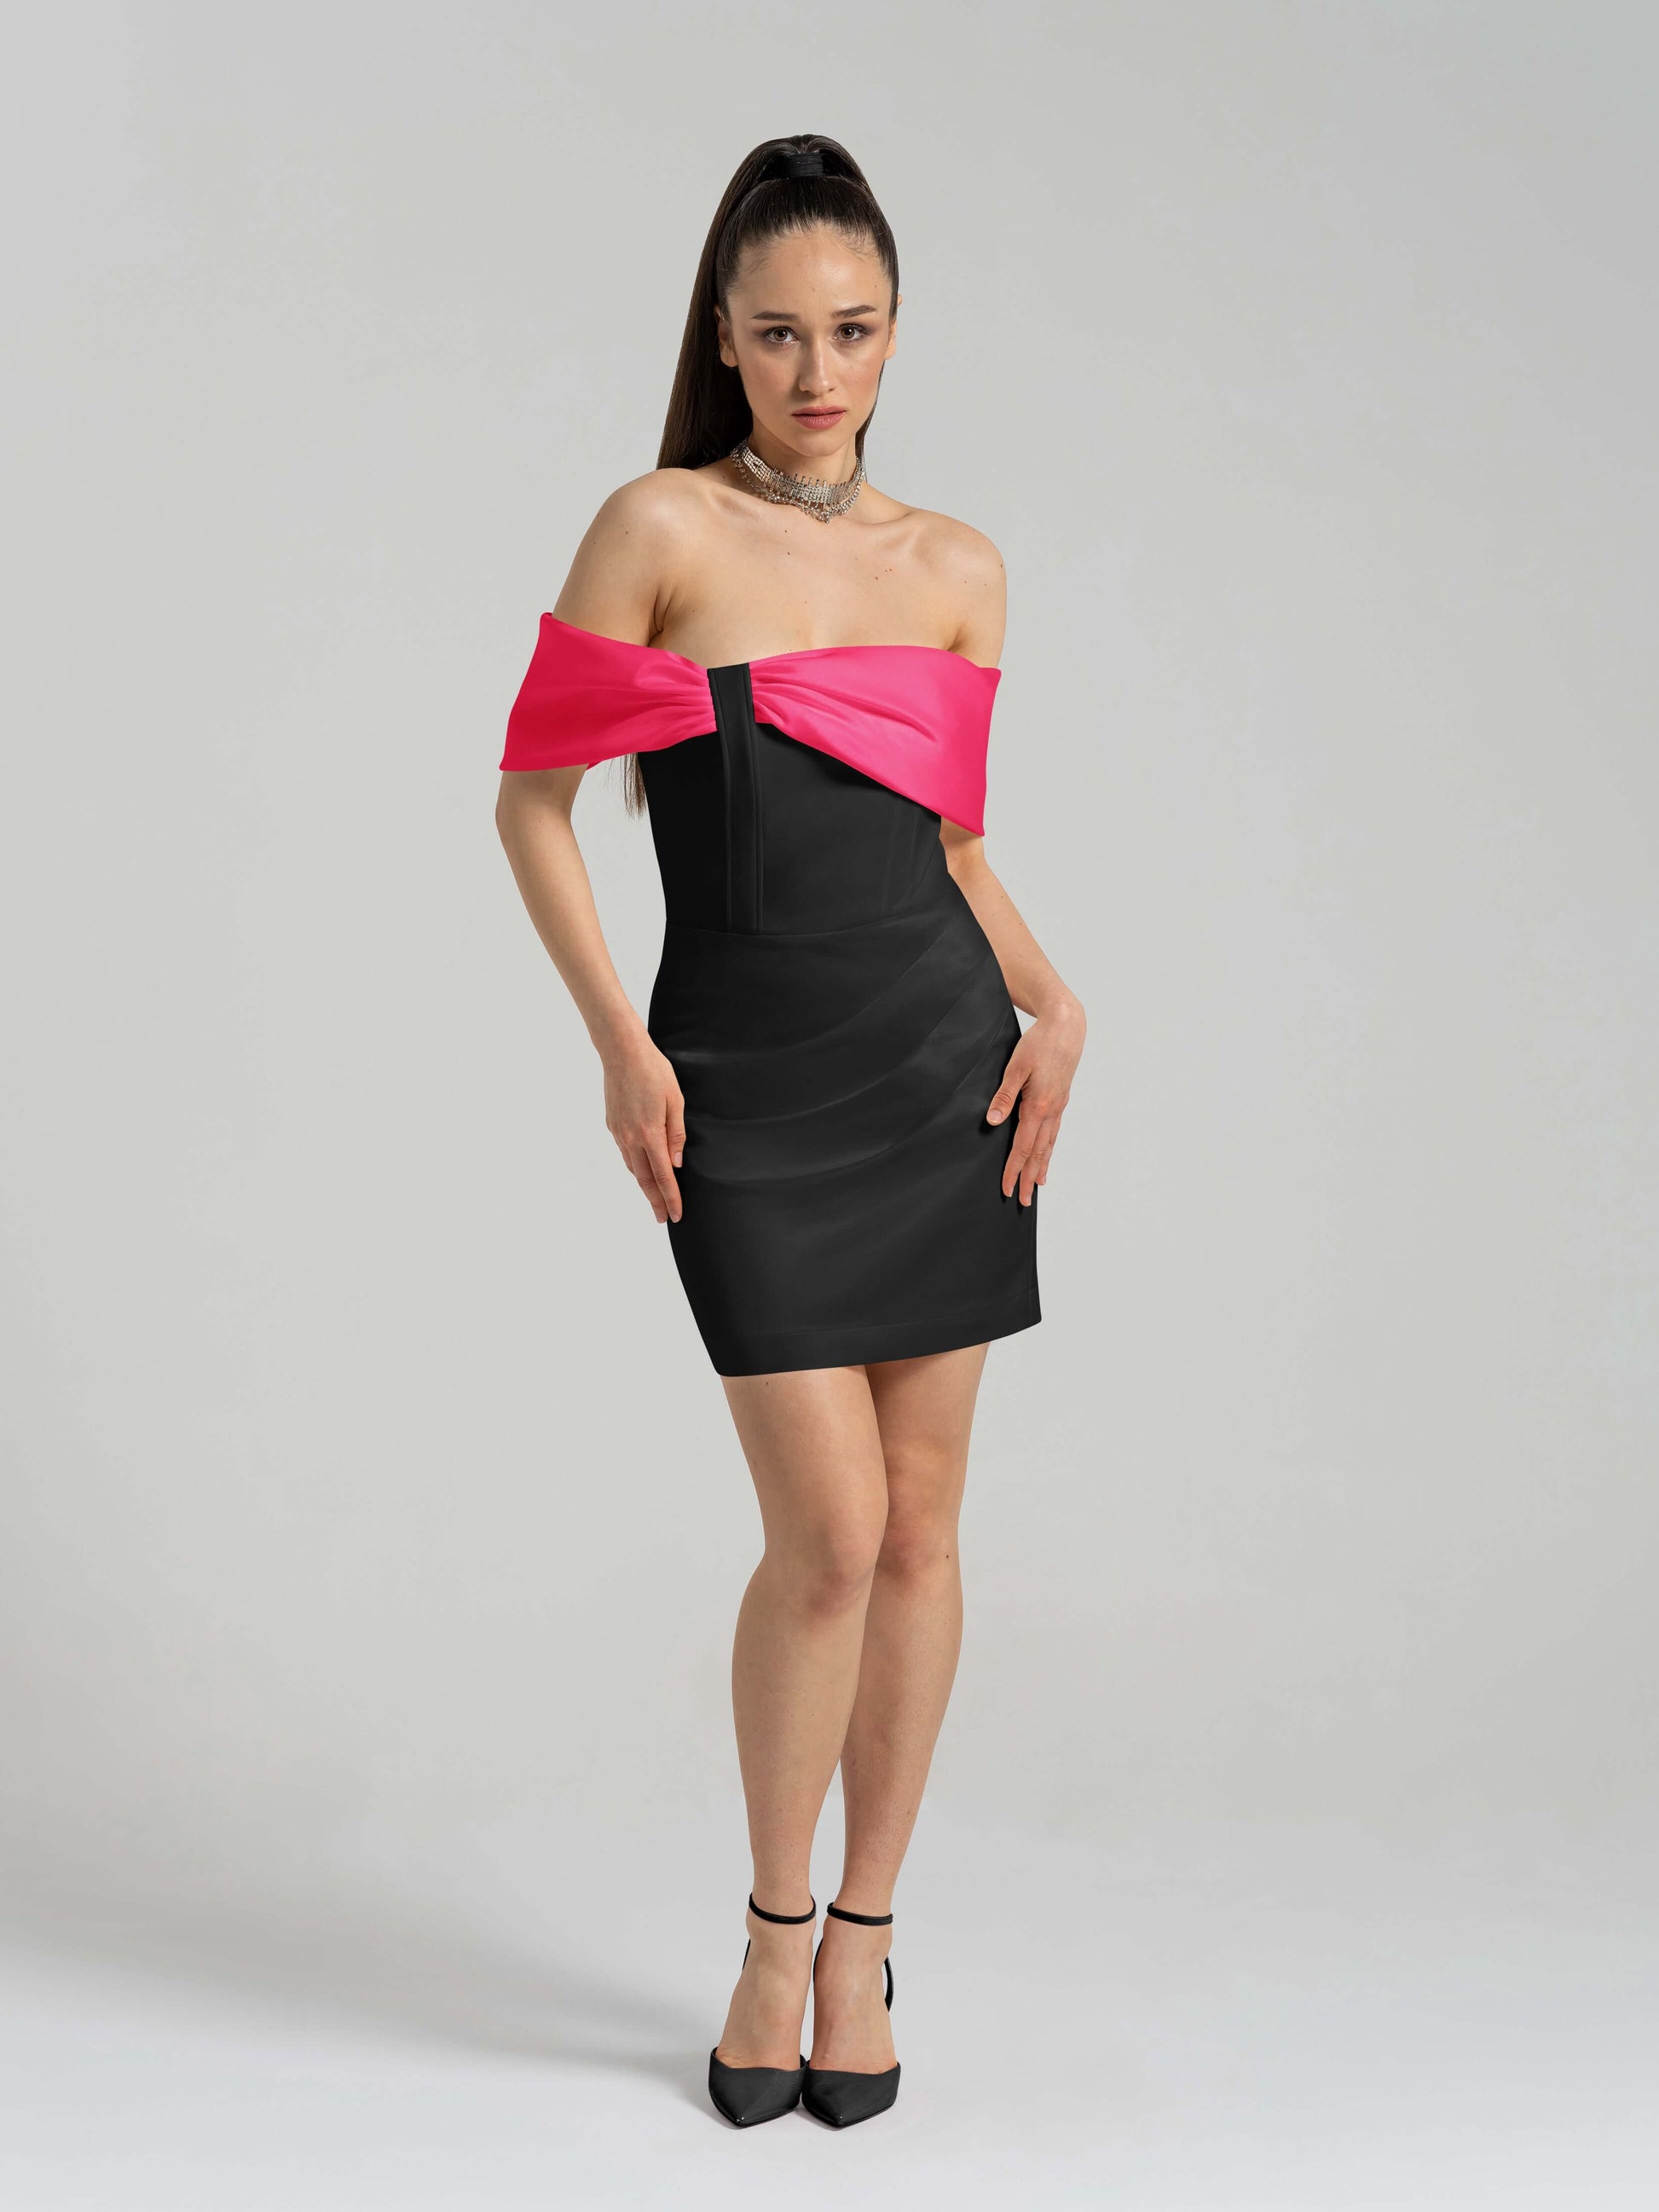 Signature of the Sun Mini Dress - Black & Pink by Tia Dorraine Women's Luxury Fashion Designer Clothing Brand